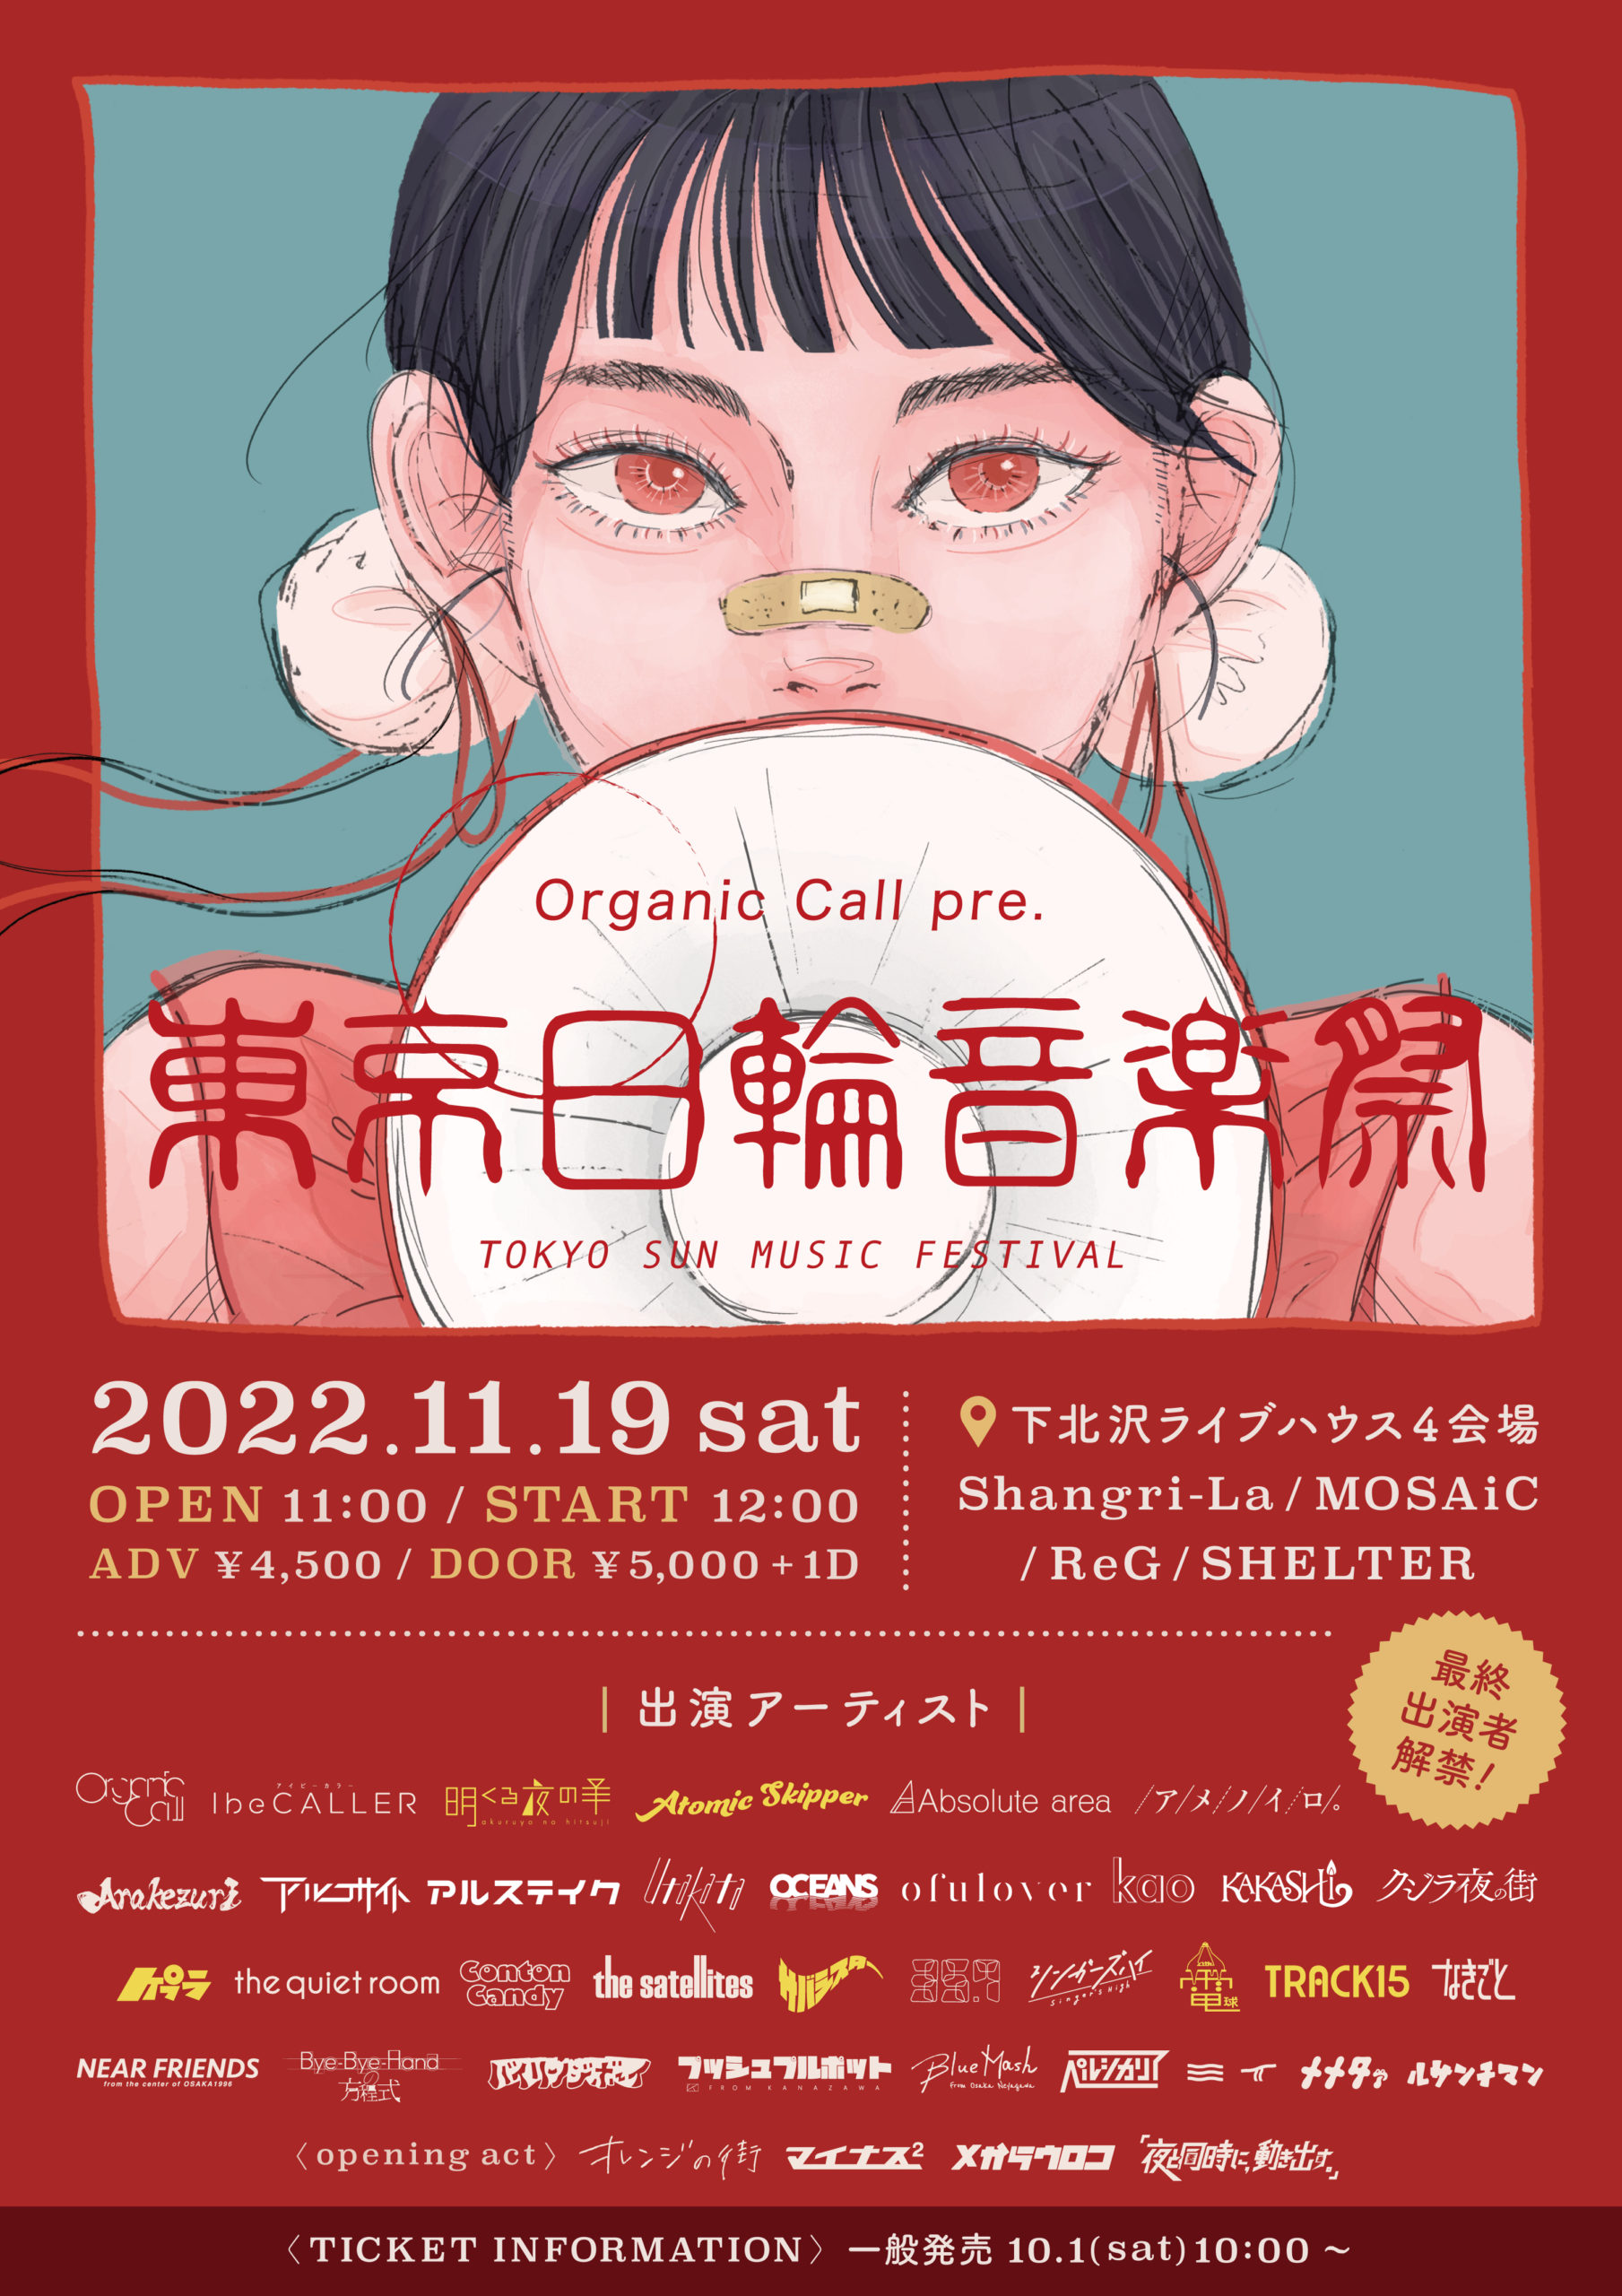 Organic Call pre 『東京日輪音楽祭』